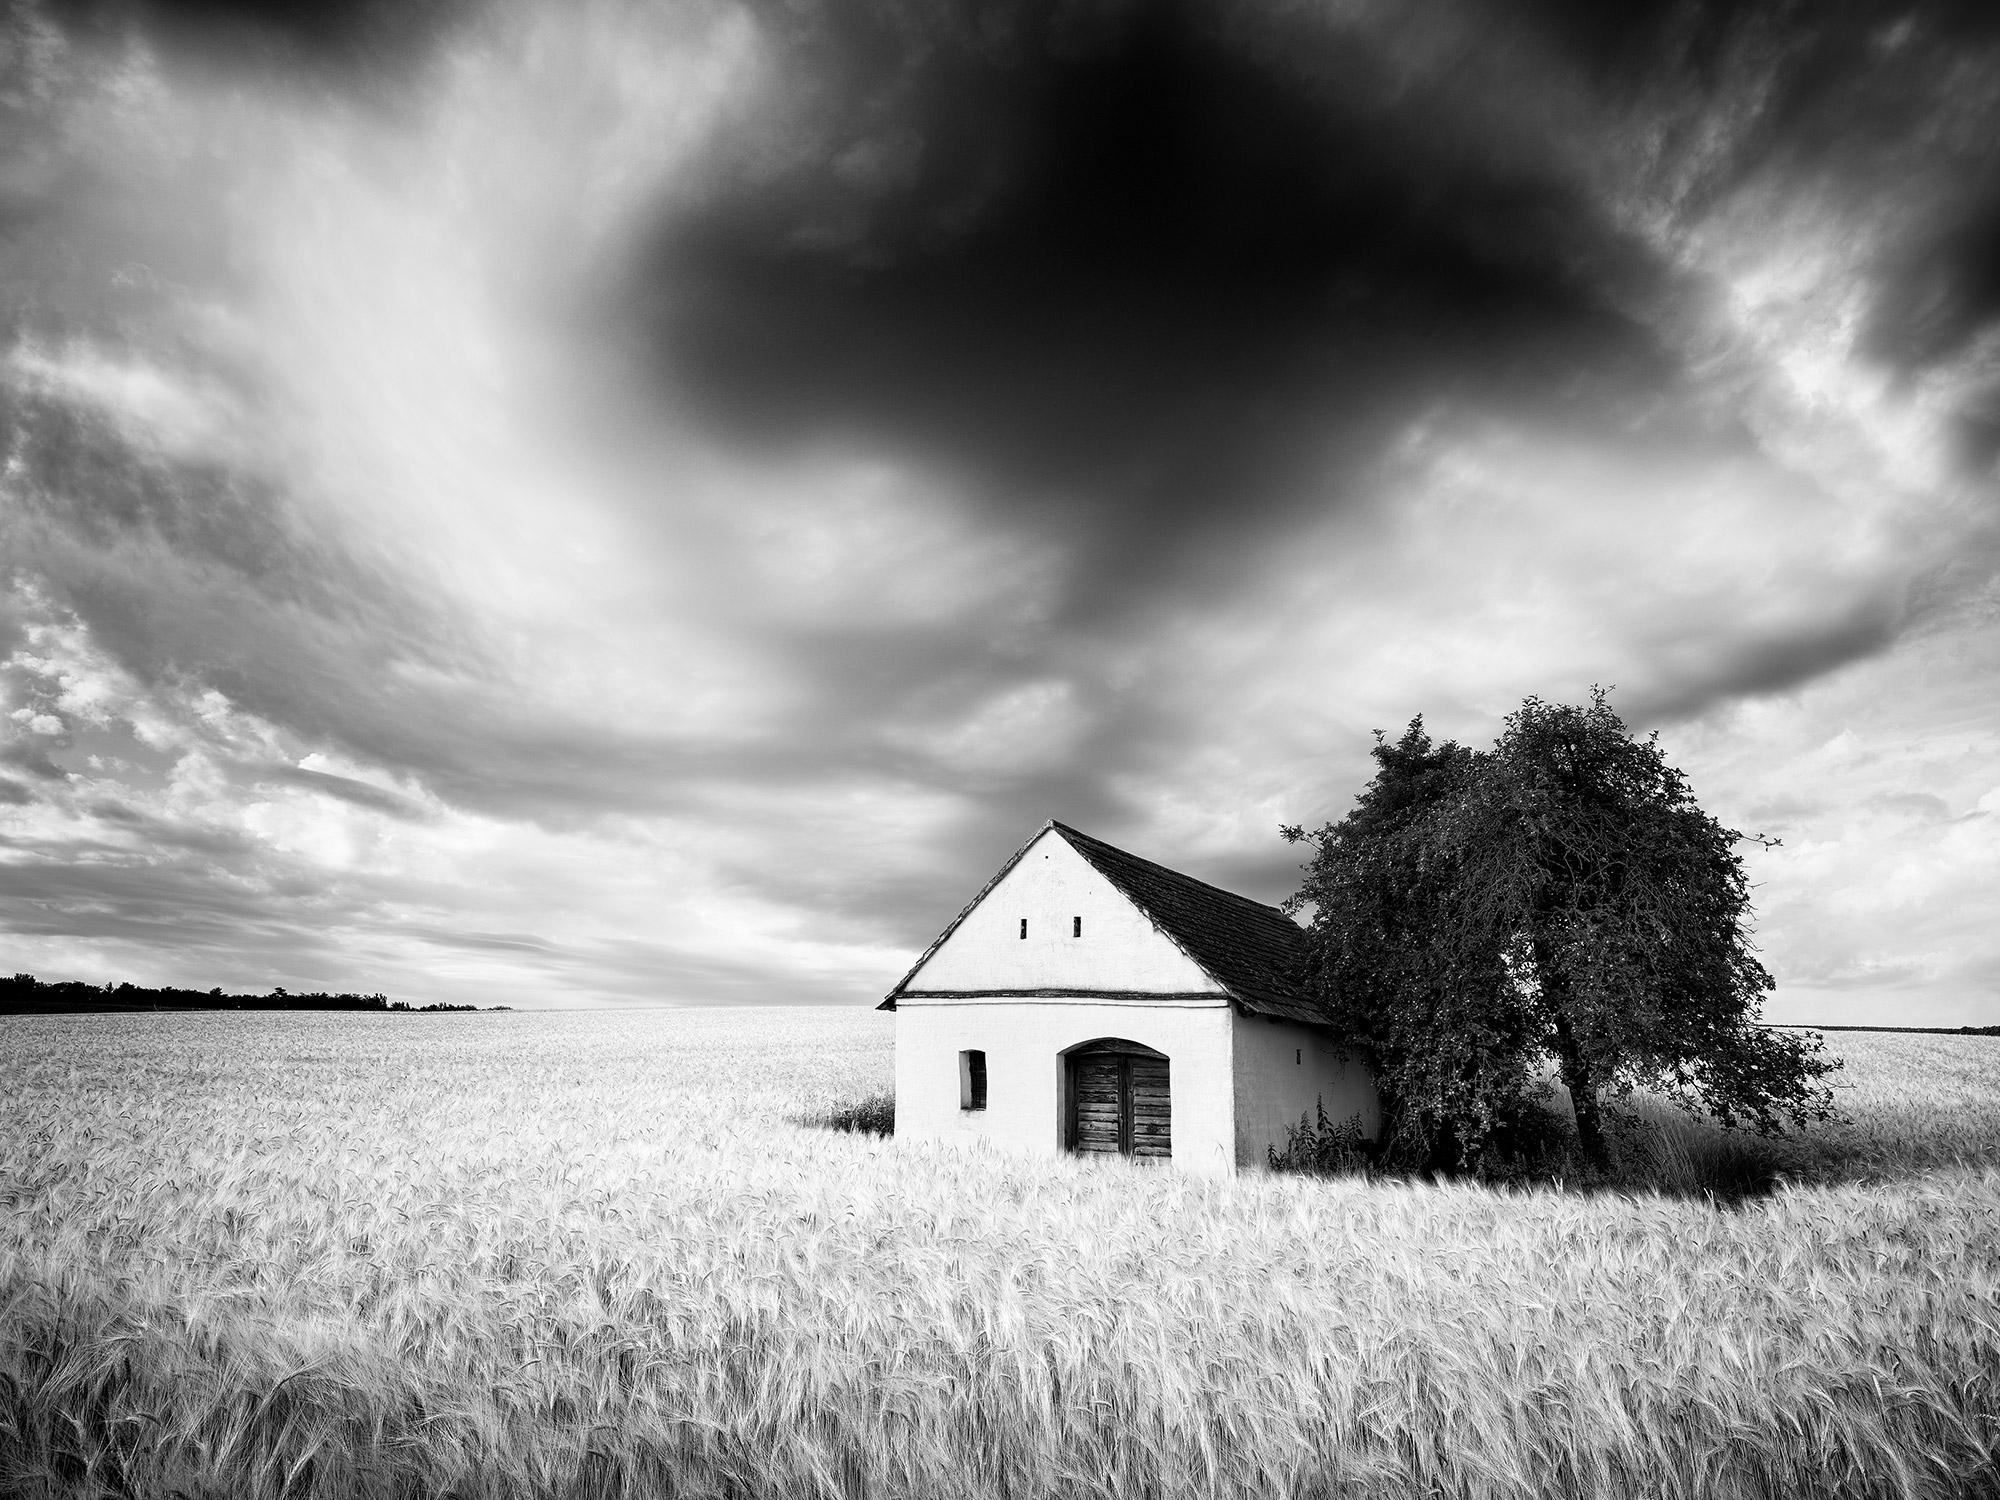 Gerald Berghammer Landscape Photograph - Wine Press House, cornfield, Giant Cloud, black and white photography, landscape